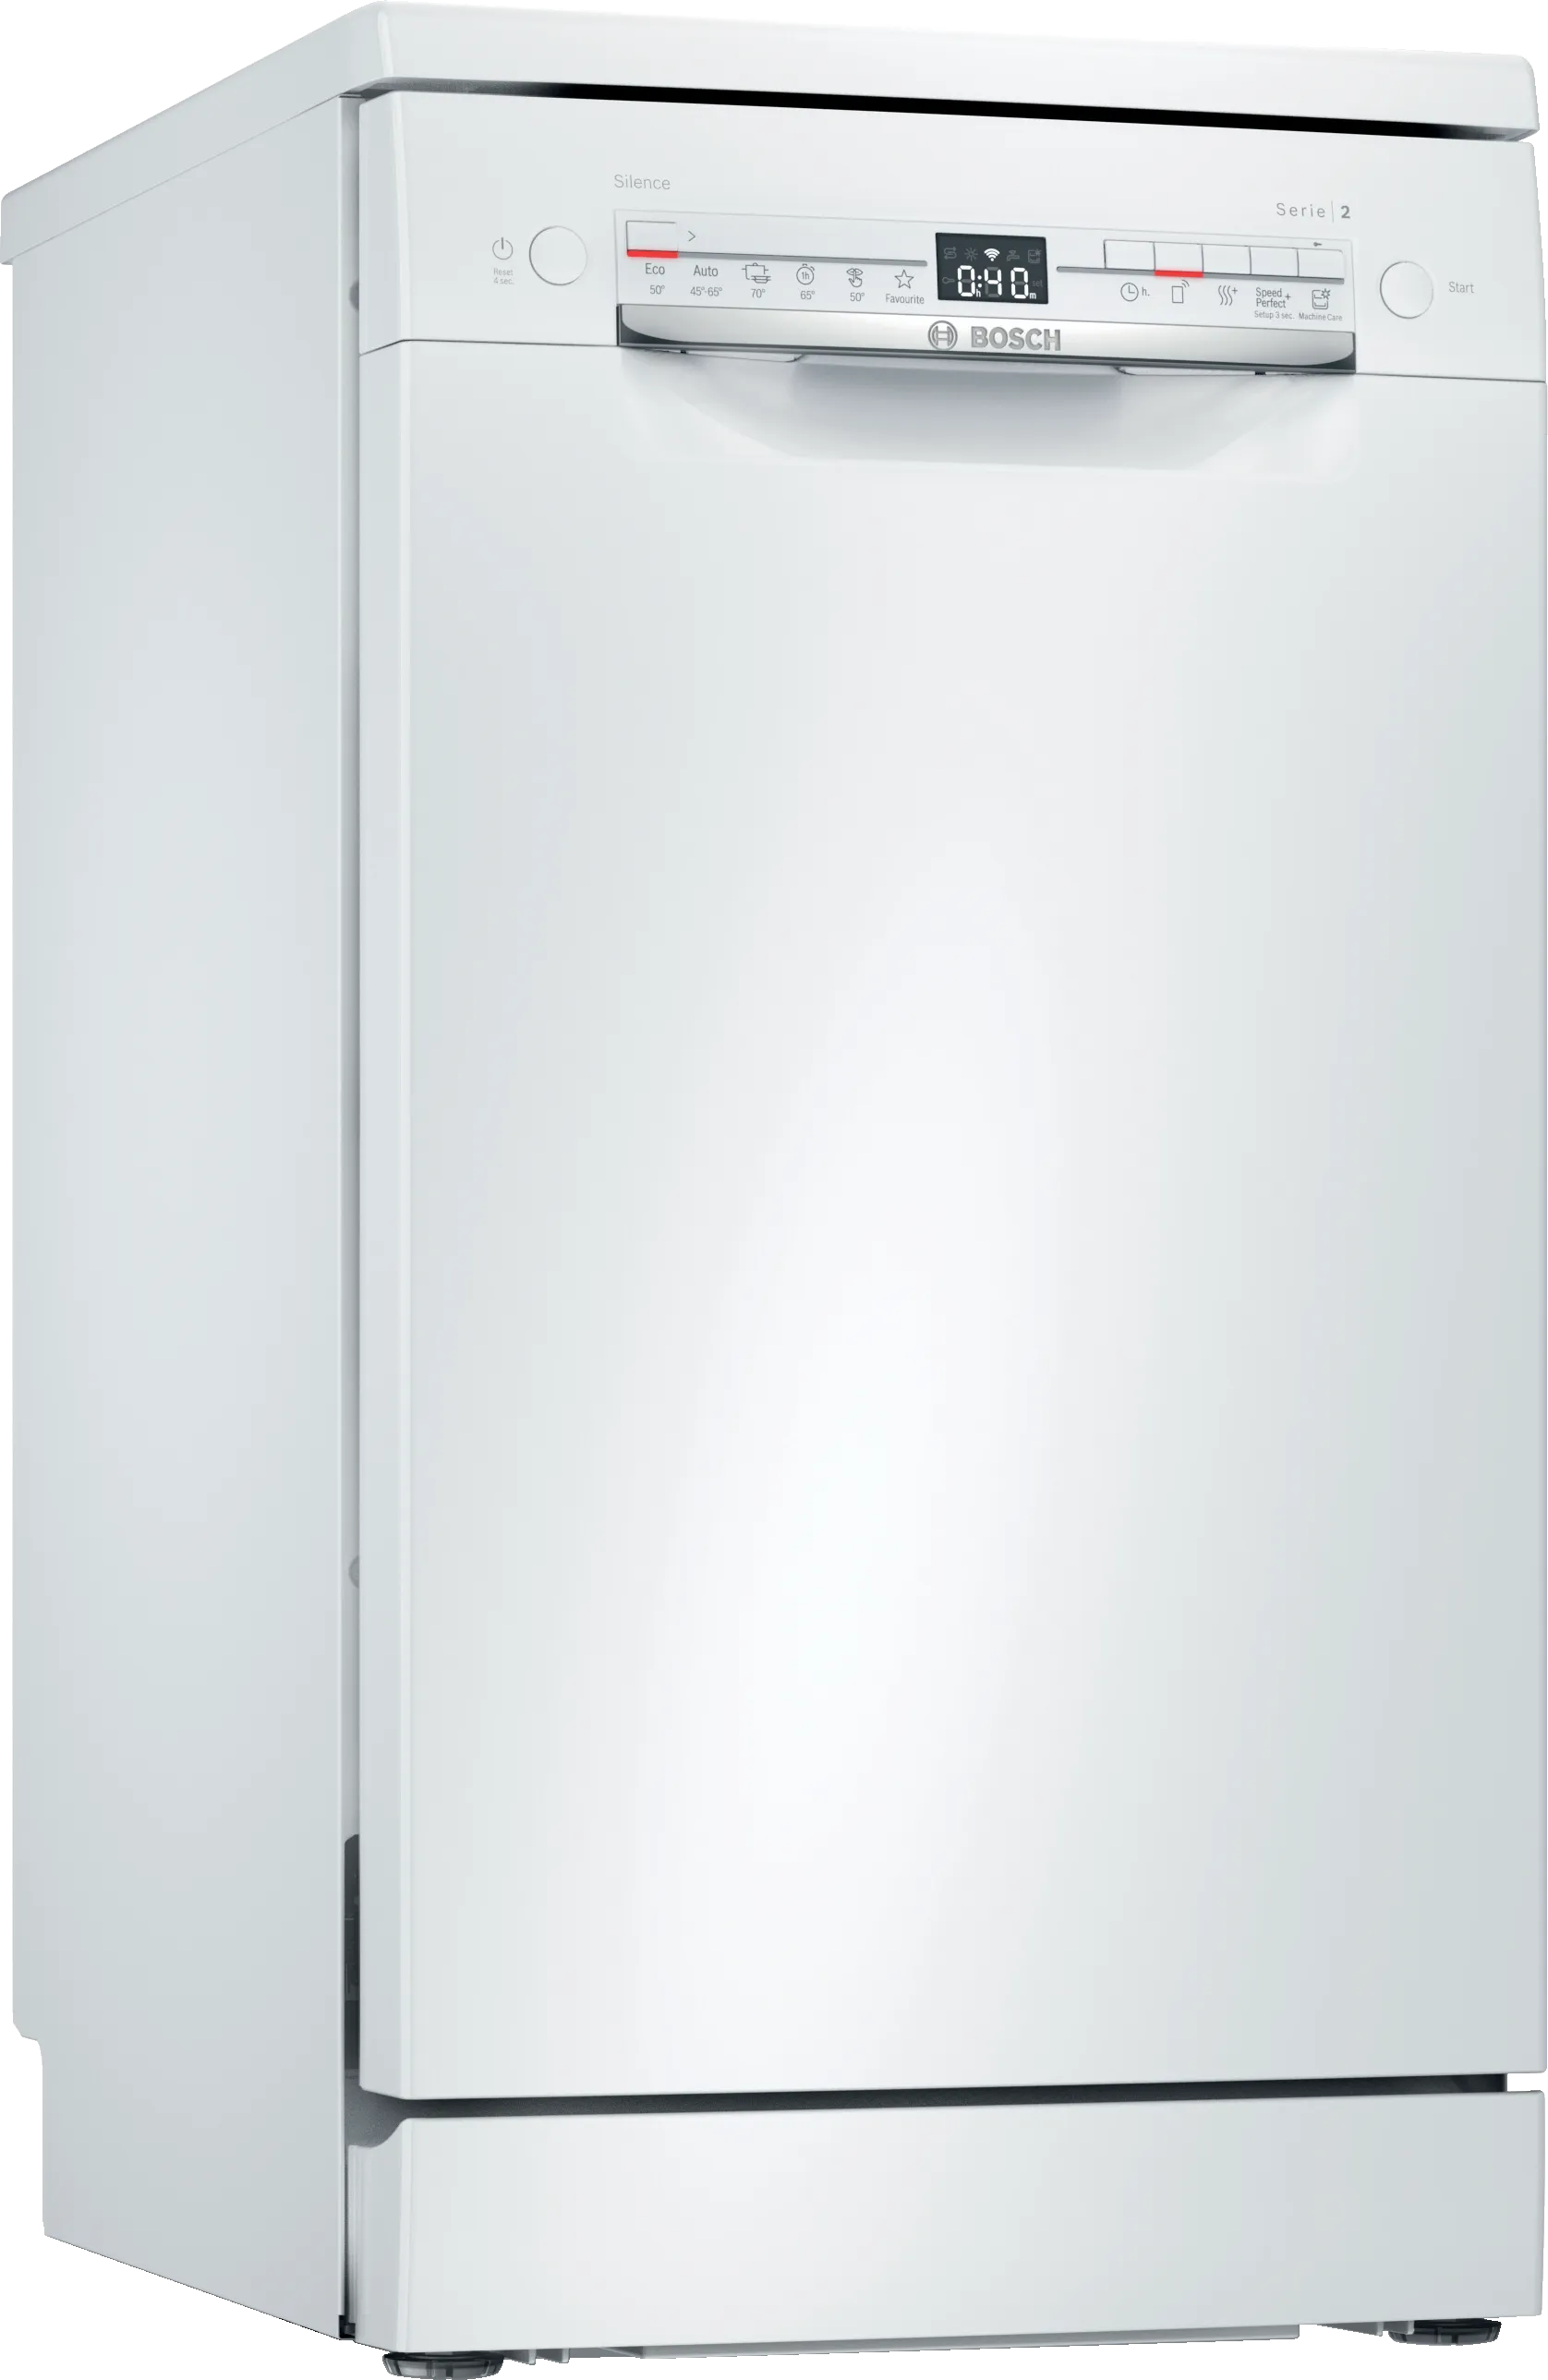 Series 2 Free-standing dishwasher 45 cm White 